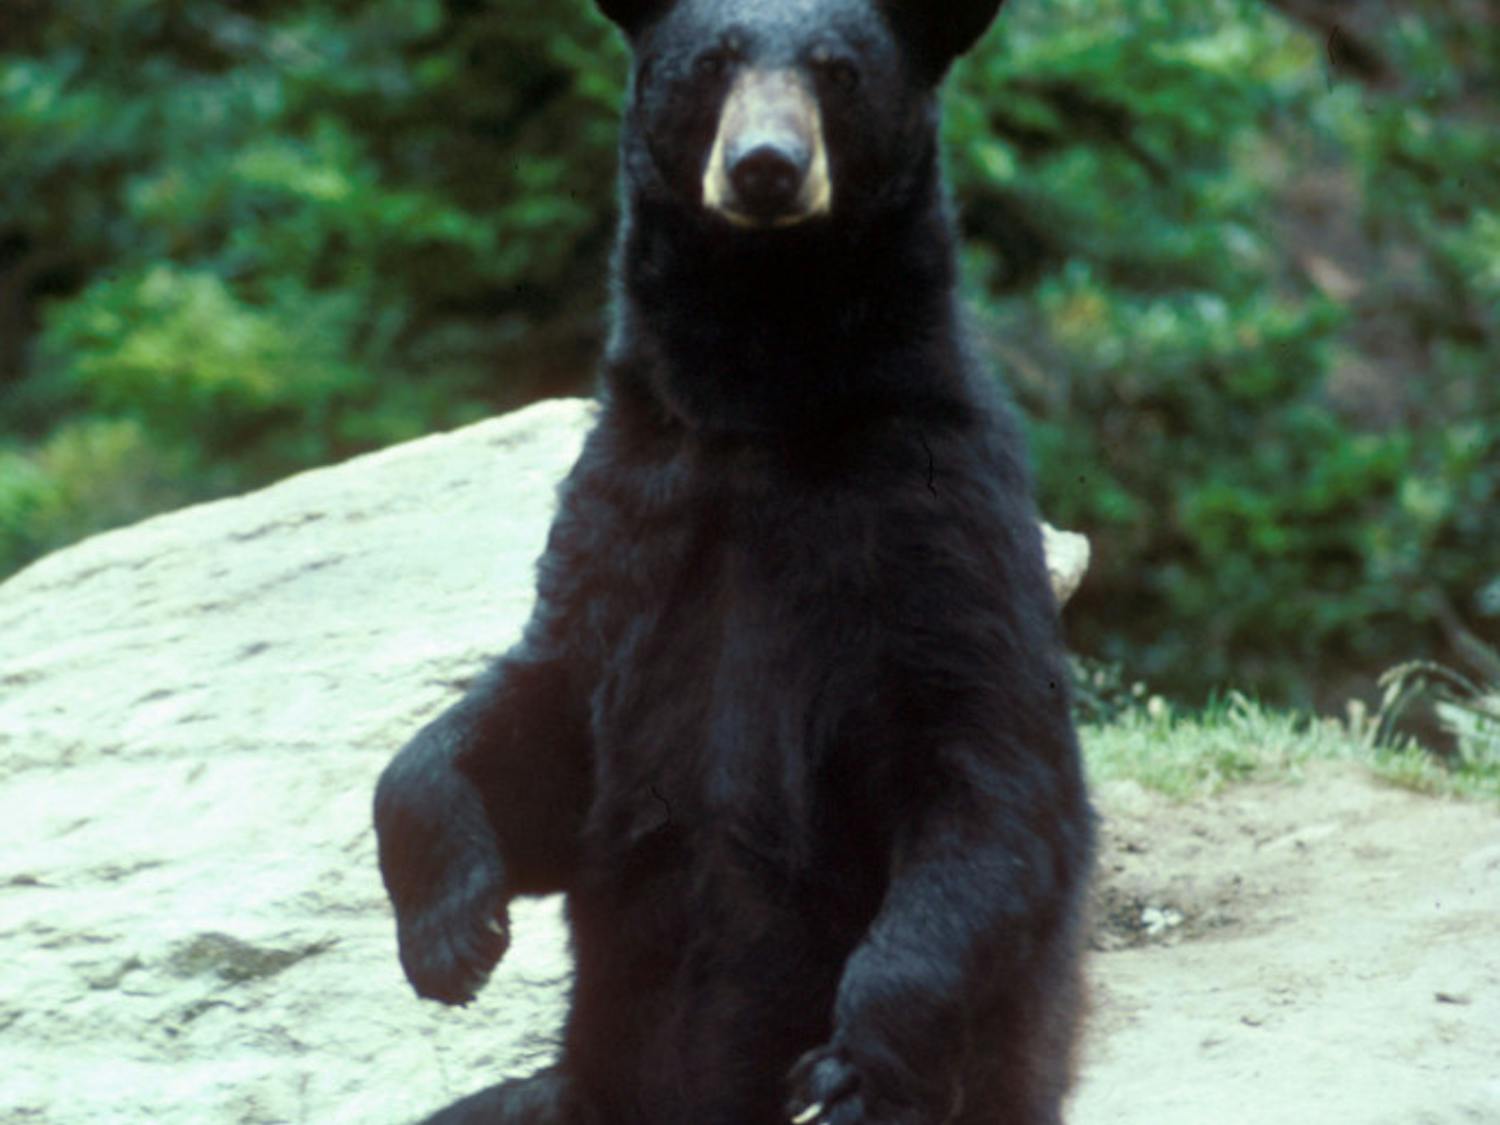 black bear